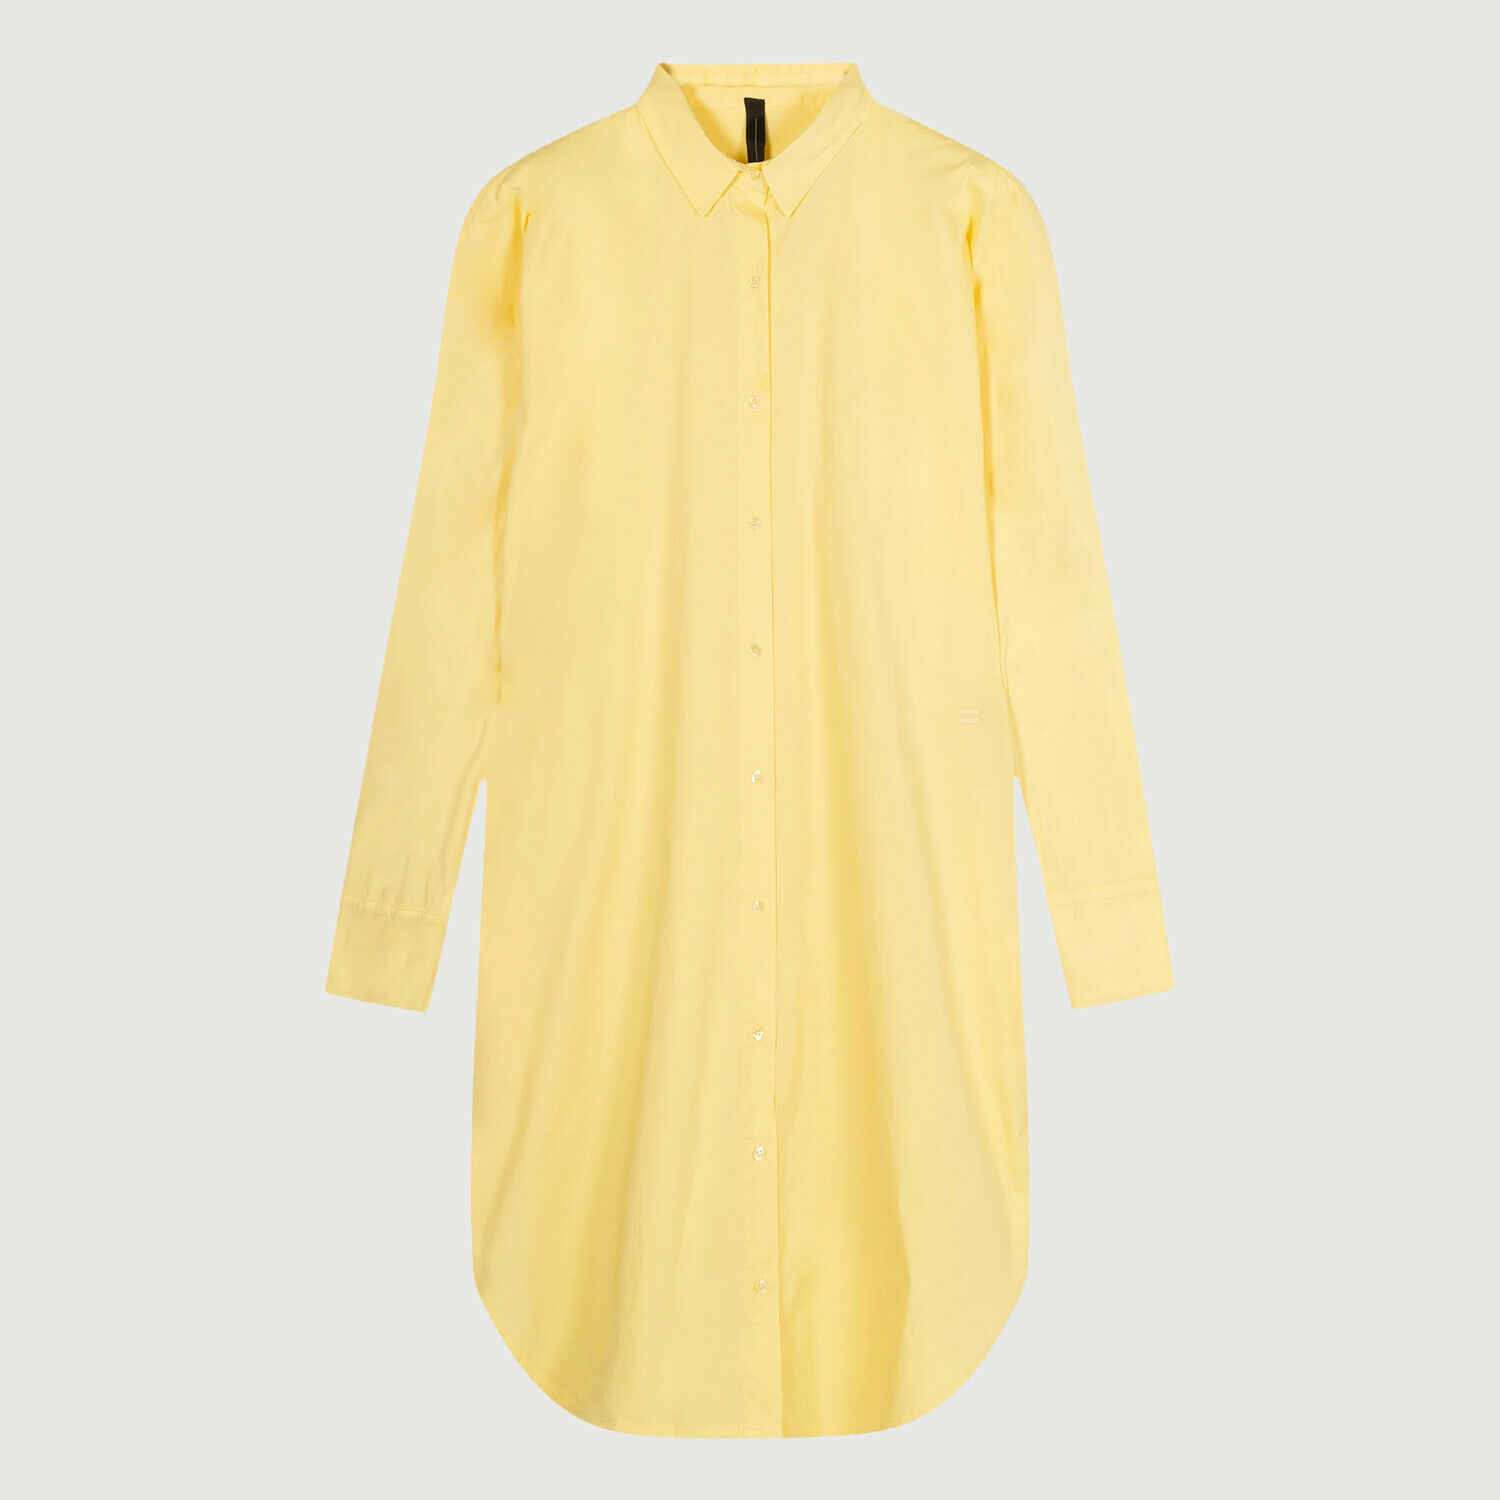 Onbepaald stapel effect 10 Days Damen Shirt Dress Blusenkleid - 20 402 1201 in Lemon - Herzstück